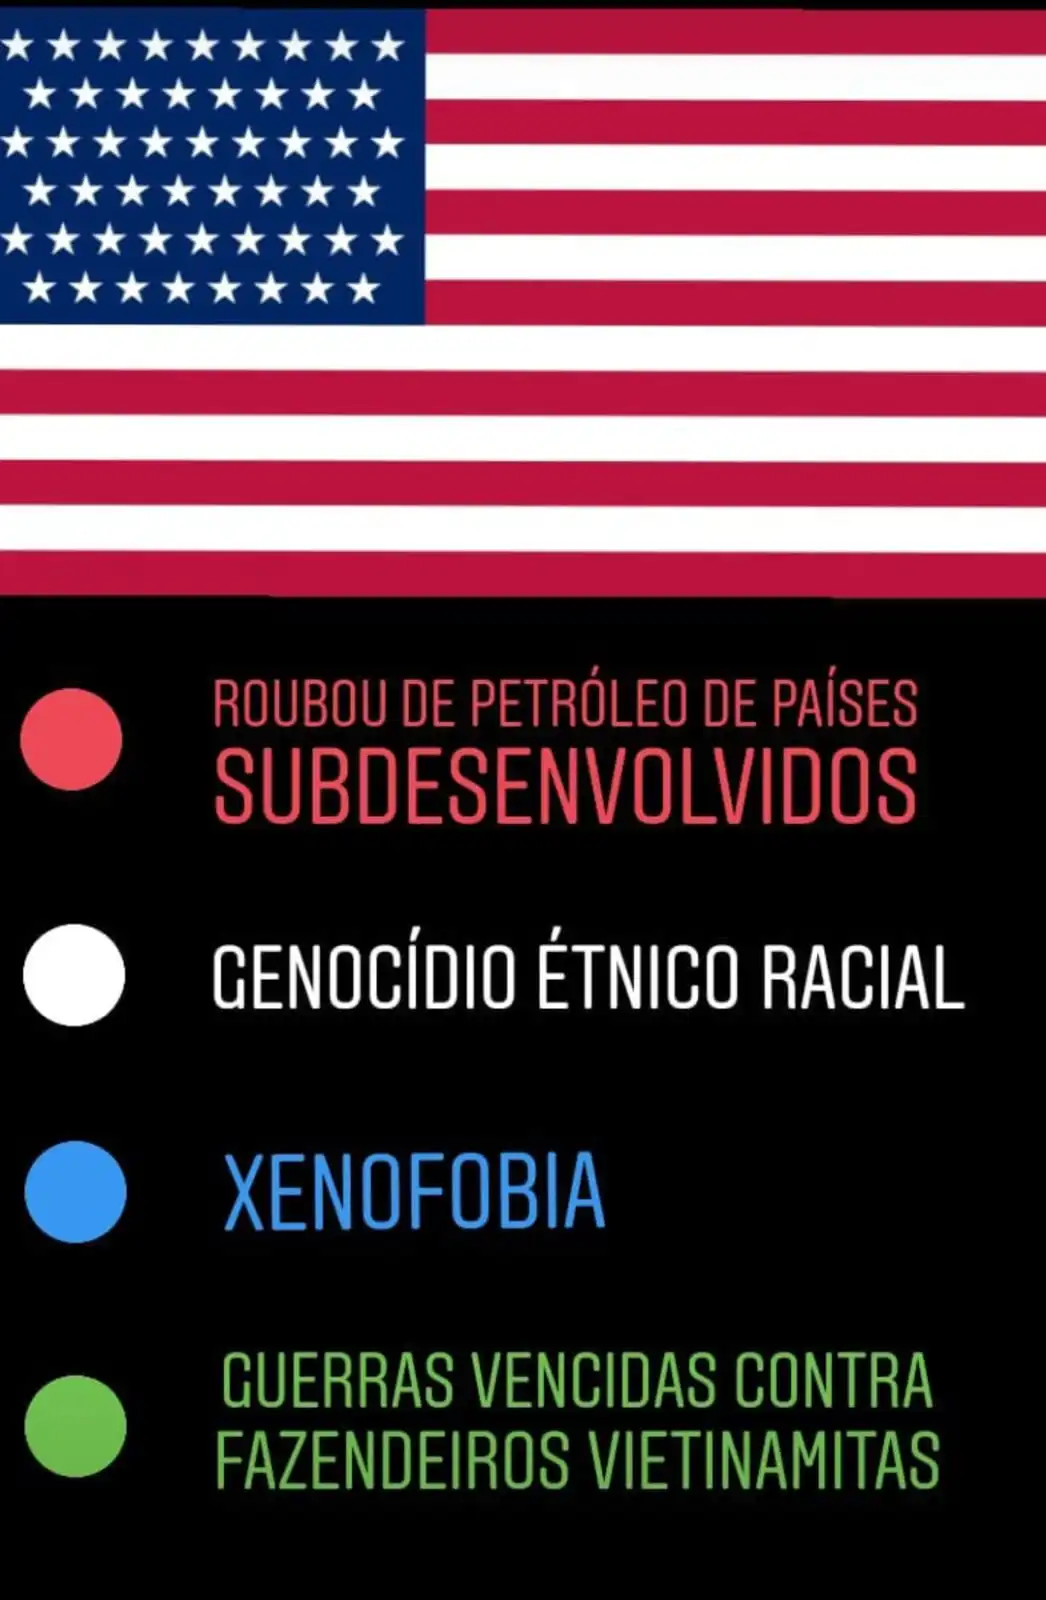 Vermelho: ROUBOU DE PETRÓLEO DE PAÍSES SUBDESENVOLVIDOS

Branco: GENOCÍDIO ÉTNICO RACIAL

Azul: XENOFOBIA

Verde: GUERRAS VENCIDAS CONTRA FAZENDEIROS VIETINAMITAS